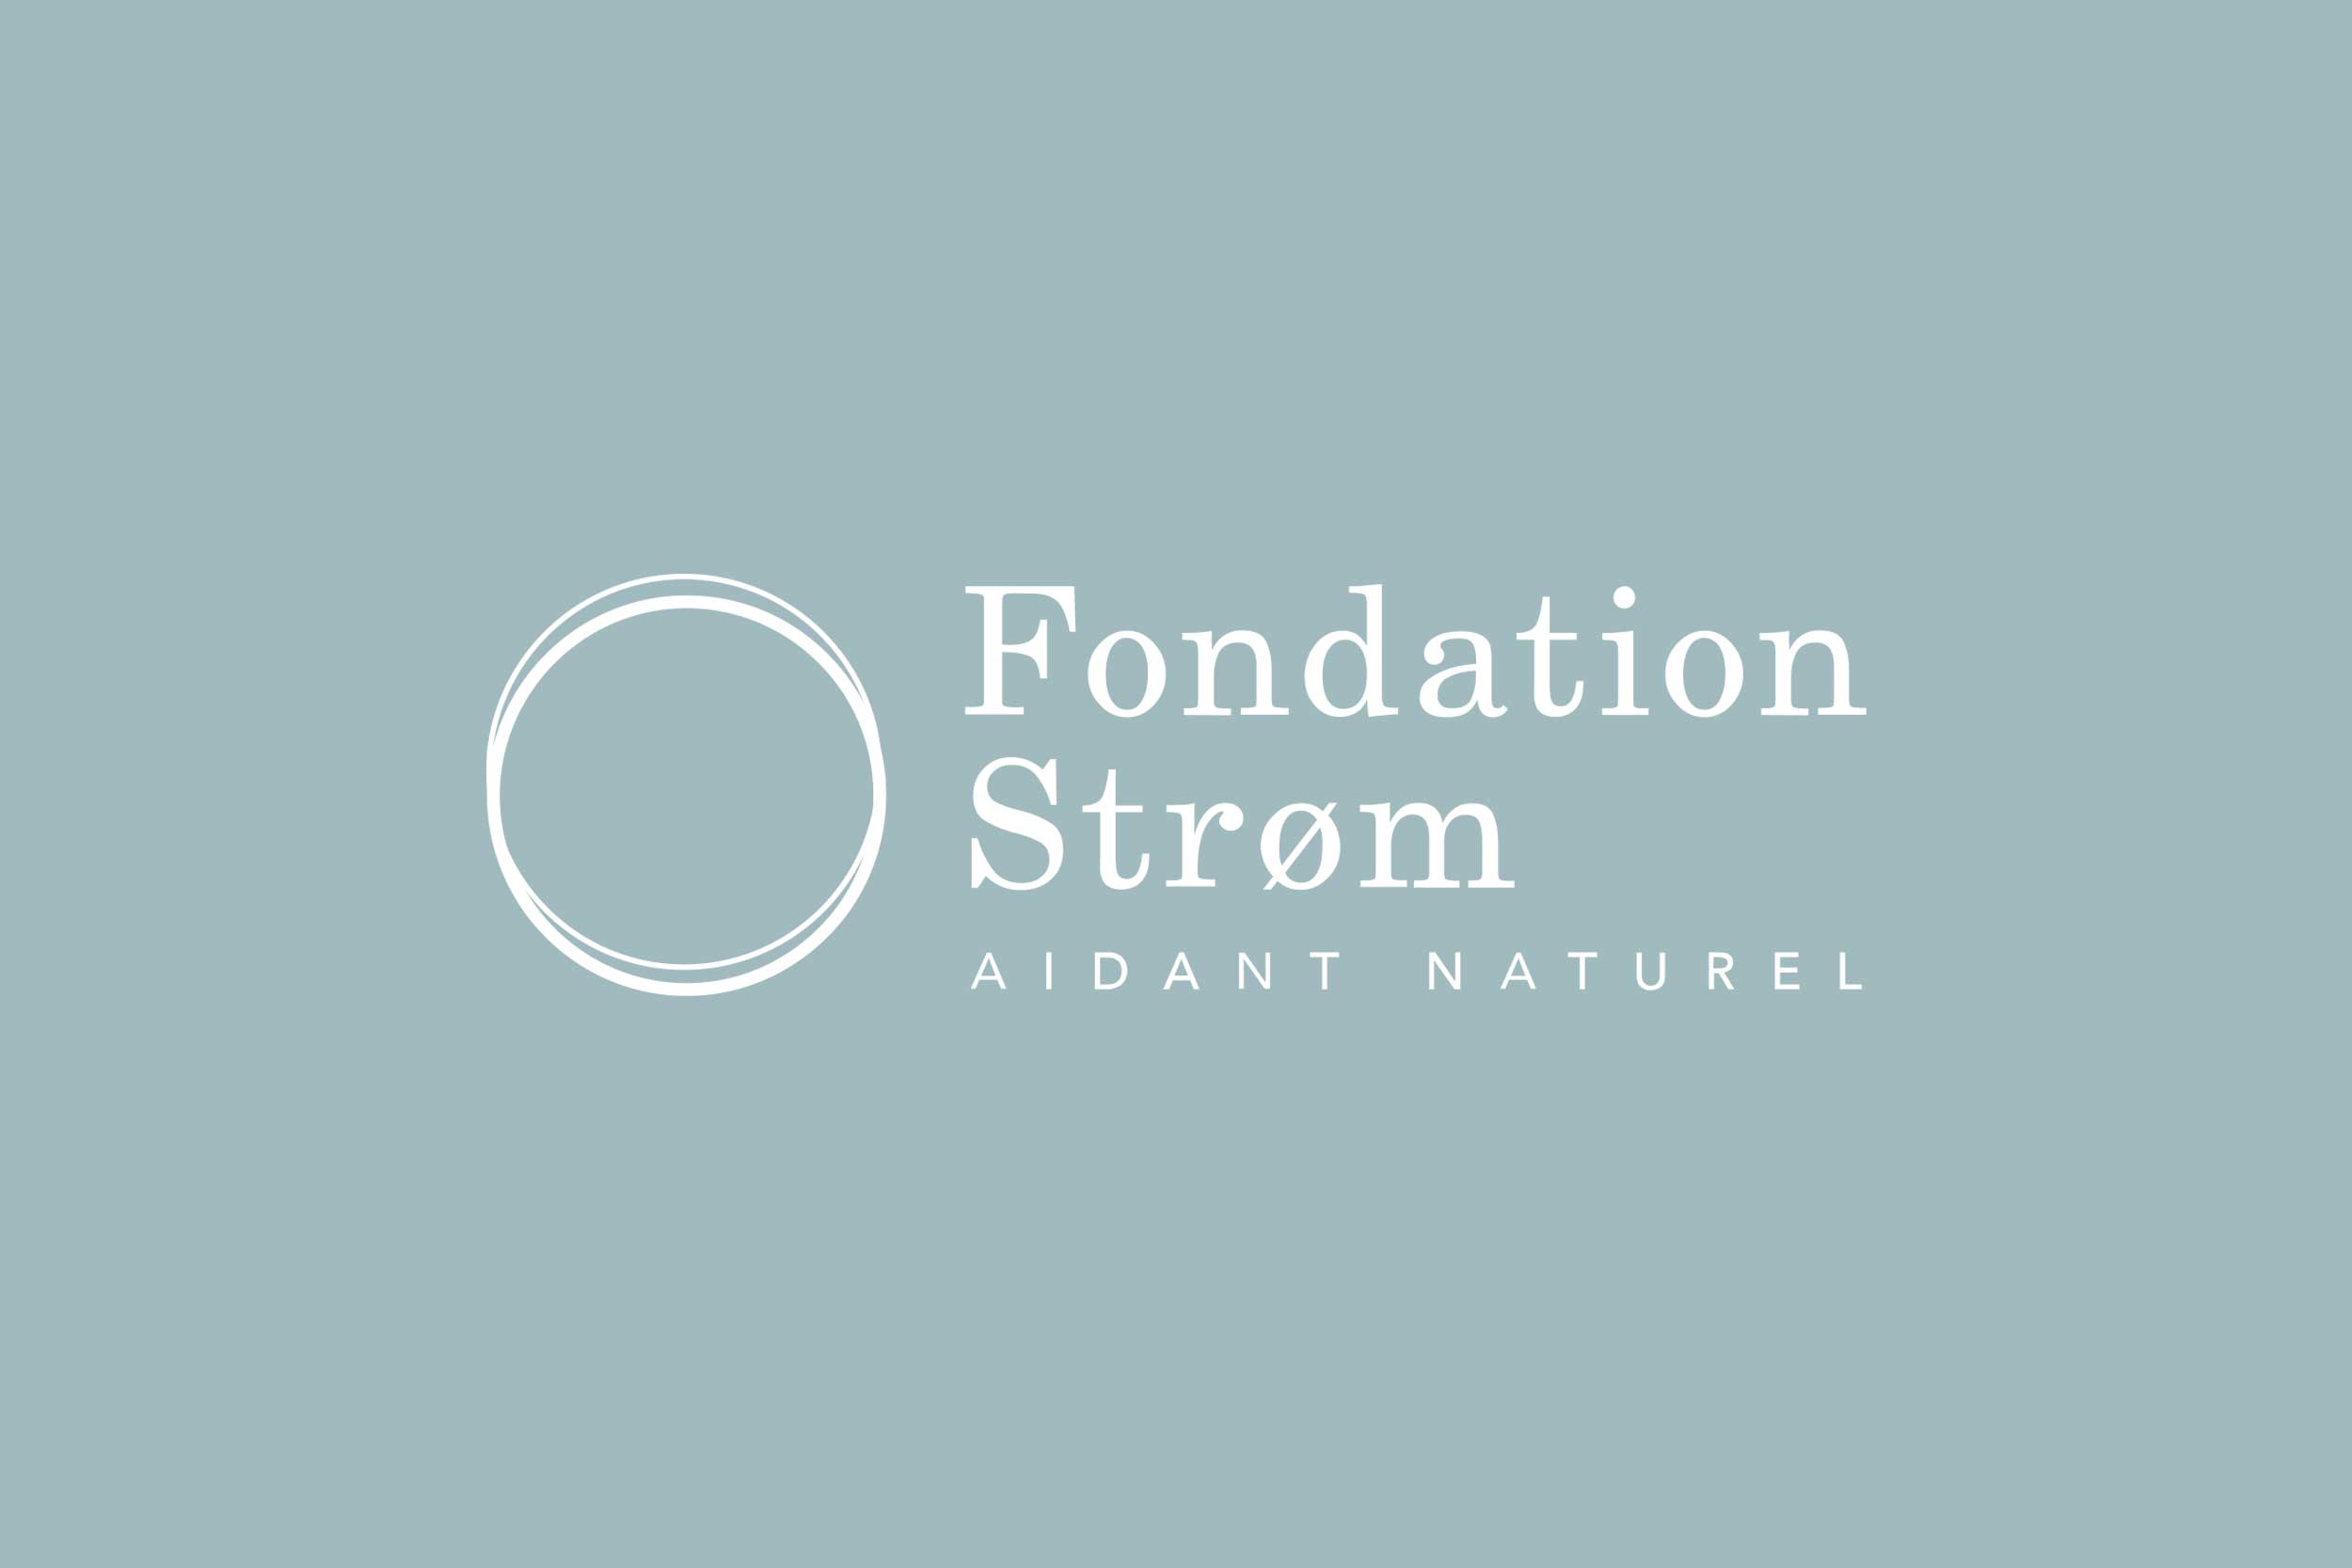 Fondation-aidants-naturel-fr_web